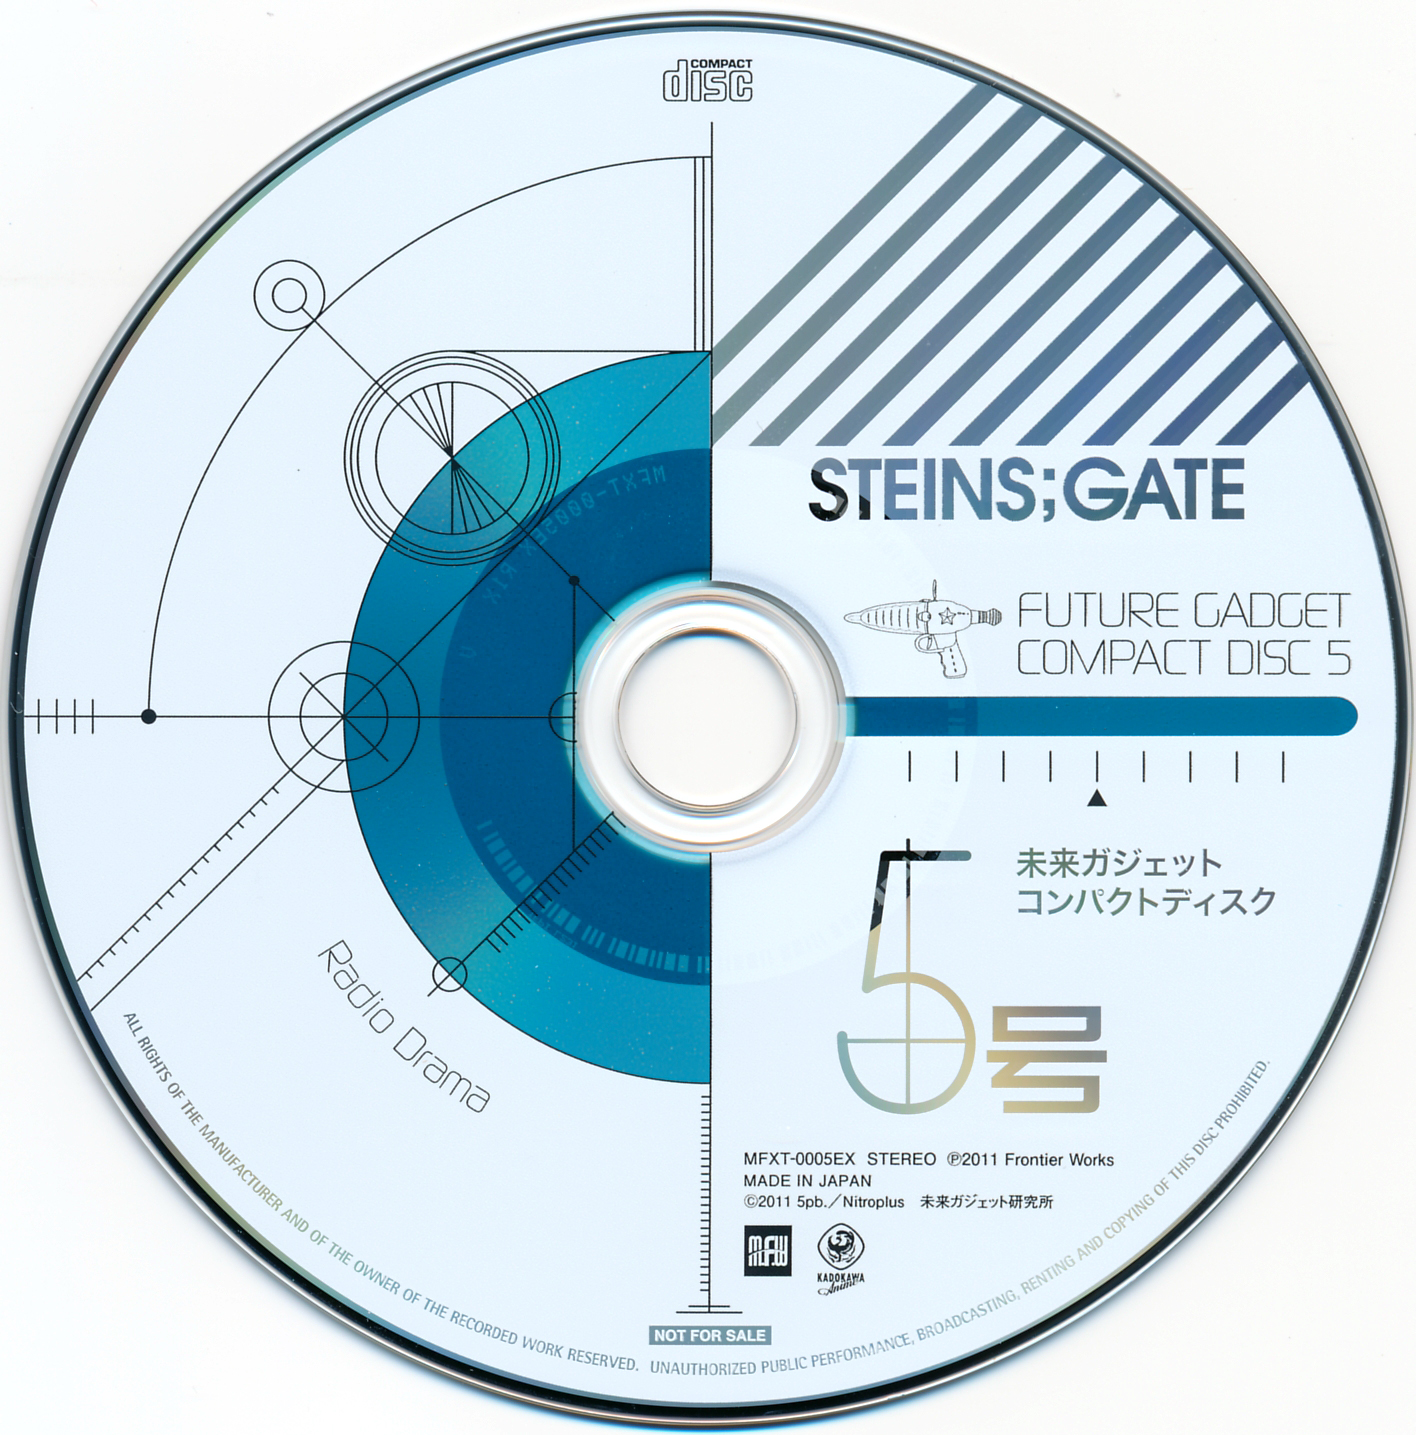 光碟-STEINS;GATE FUTURE GADGET COMPACT DISC 5.jpg